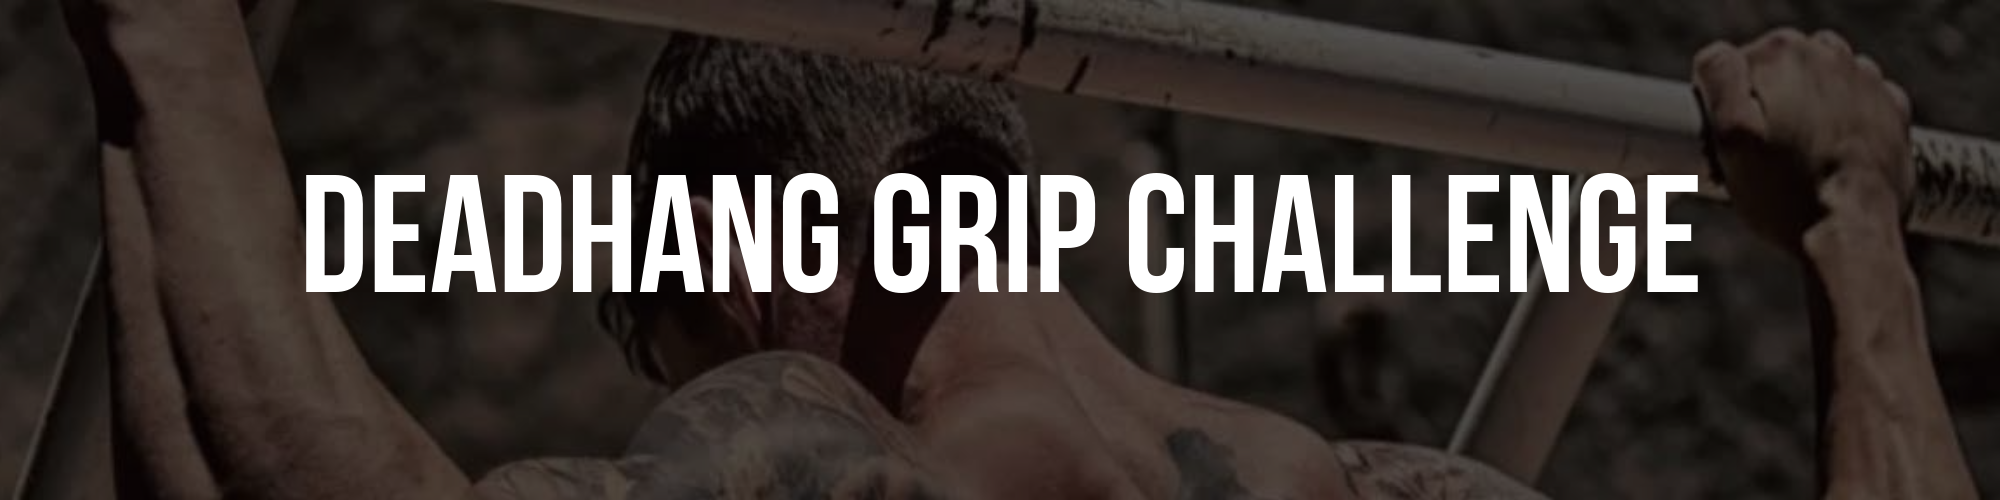 26th Nov - Deadhang Grip Challenge